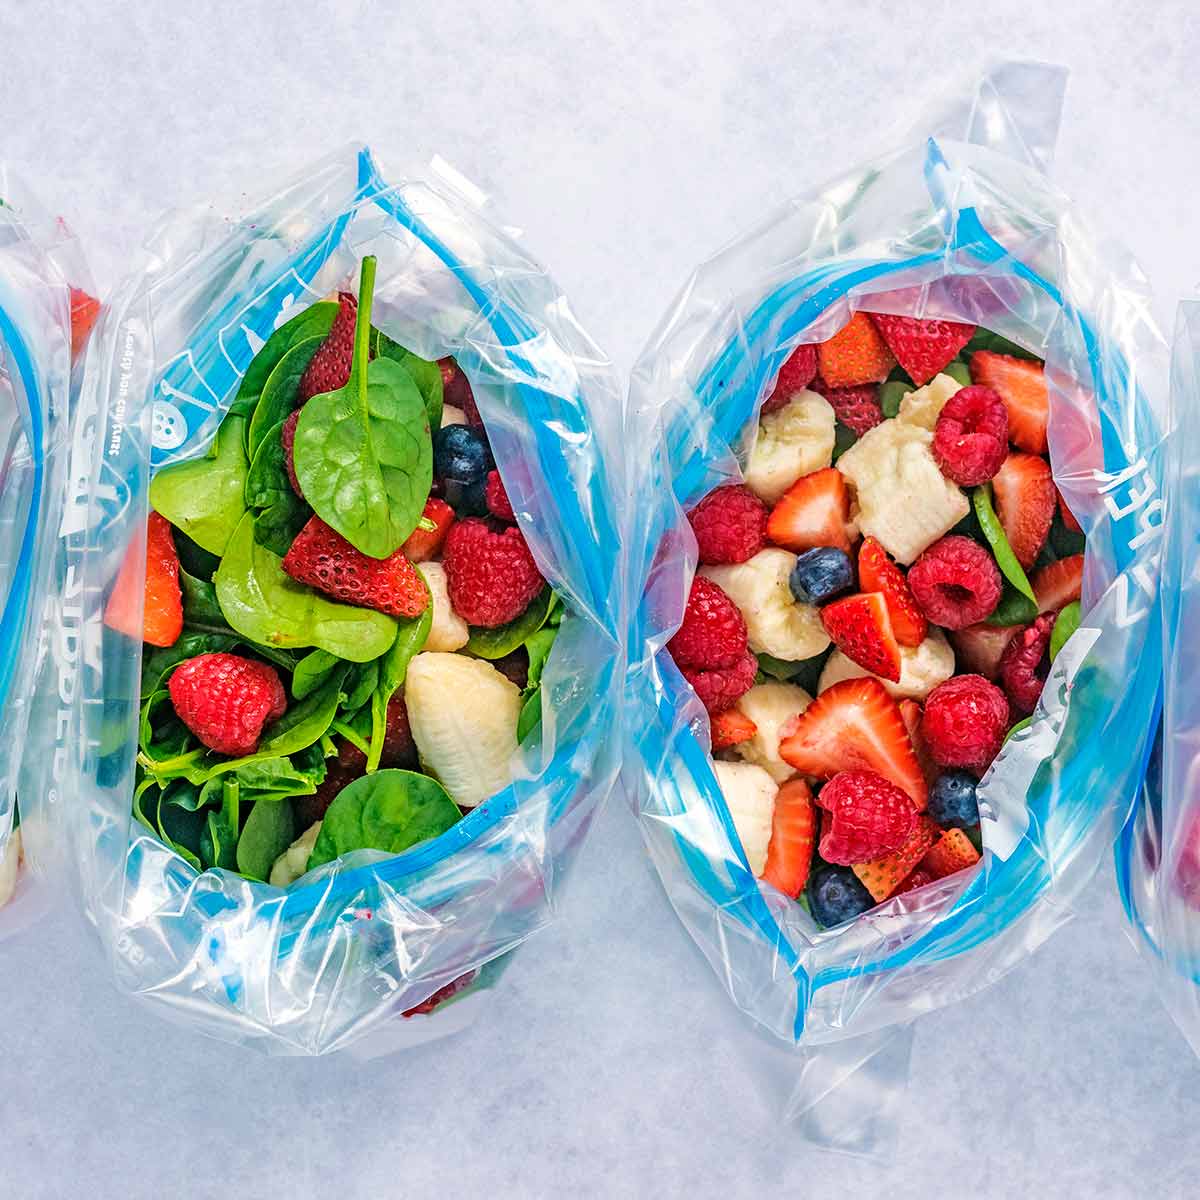 Campoverde Frozen Fruit & Veggie Smoothie 4 Packs, Fit & Wellness, 32oz Bag  - Walmart.com